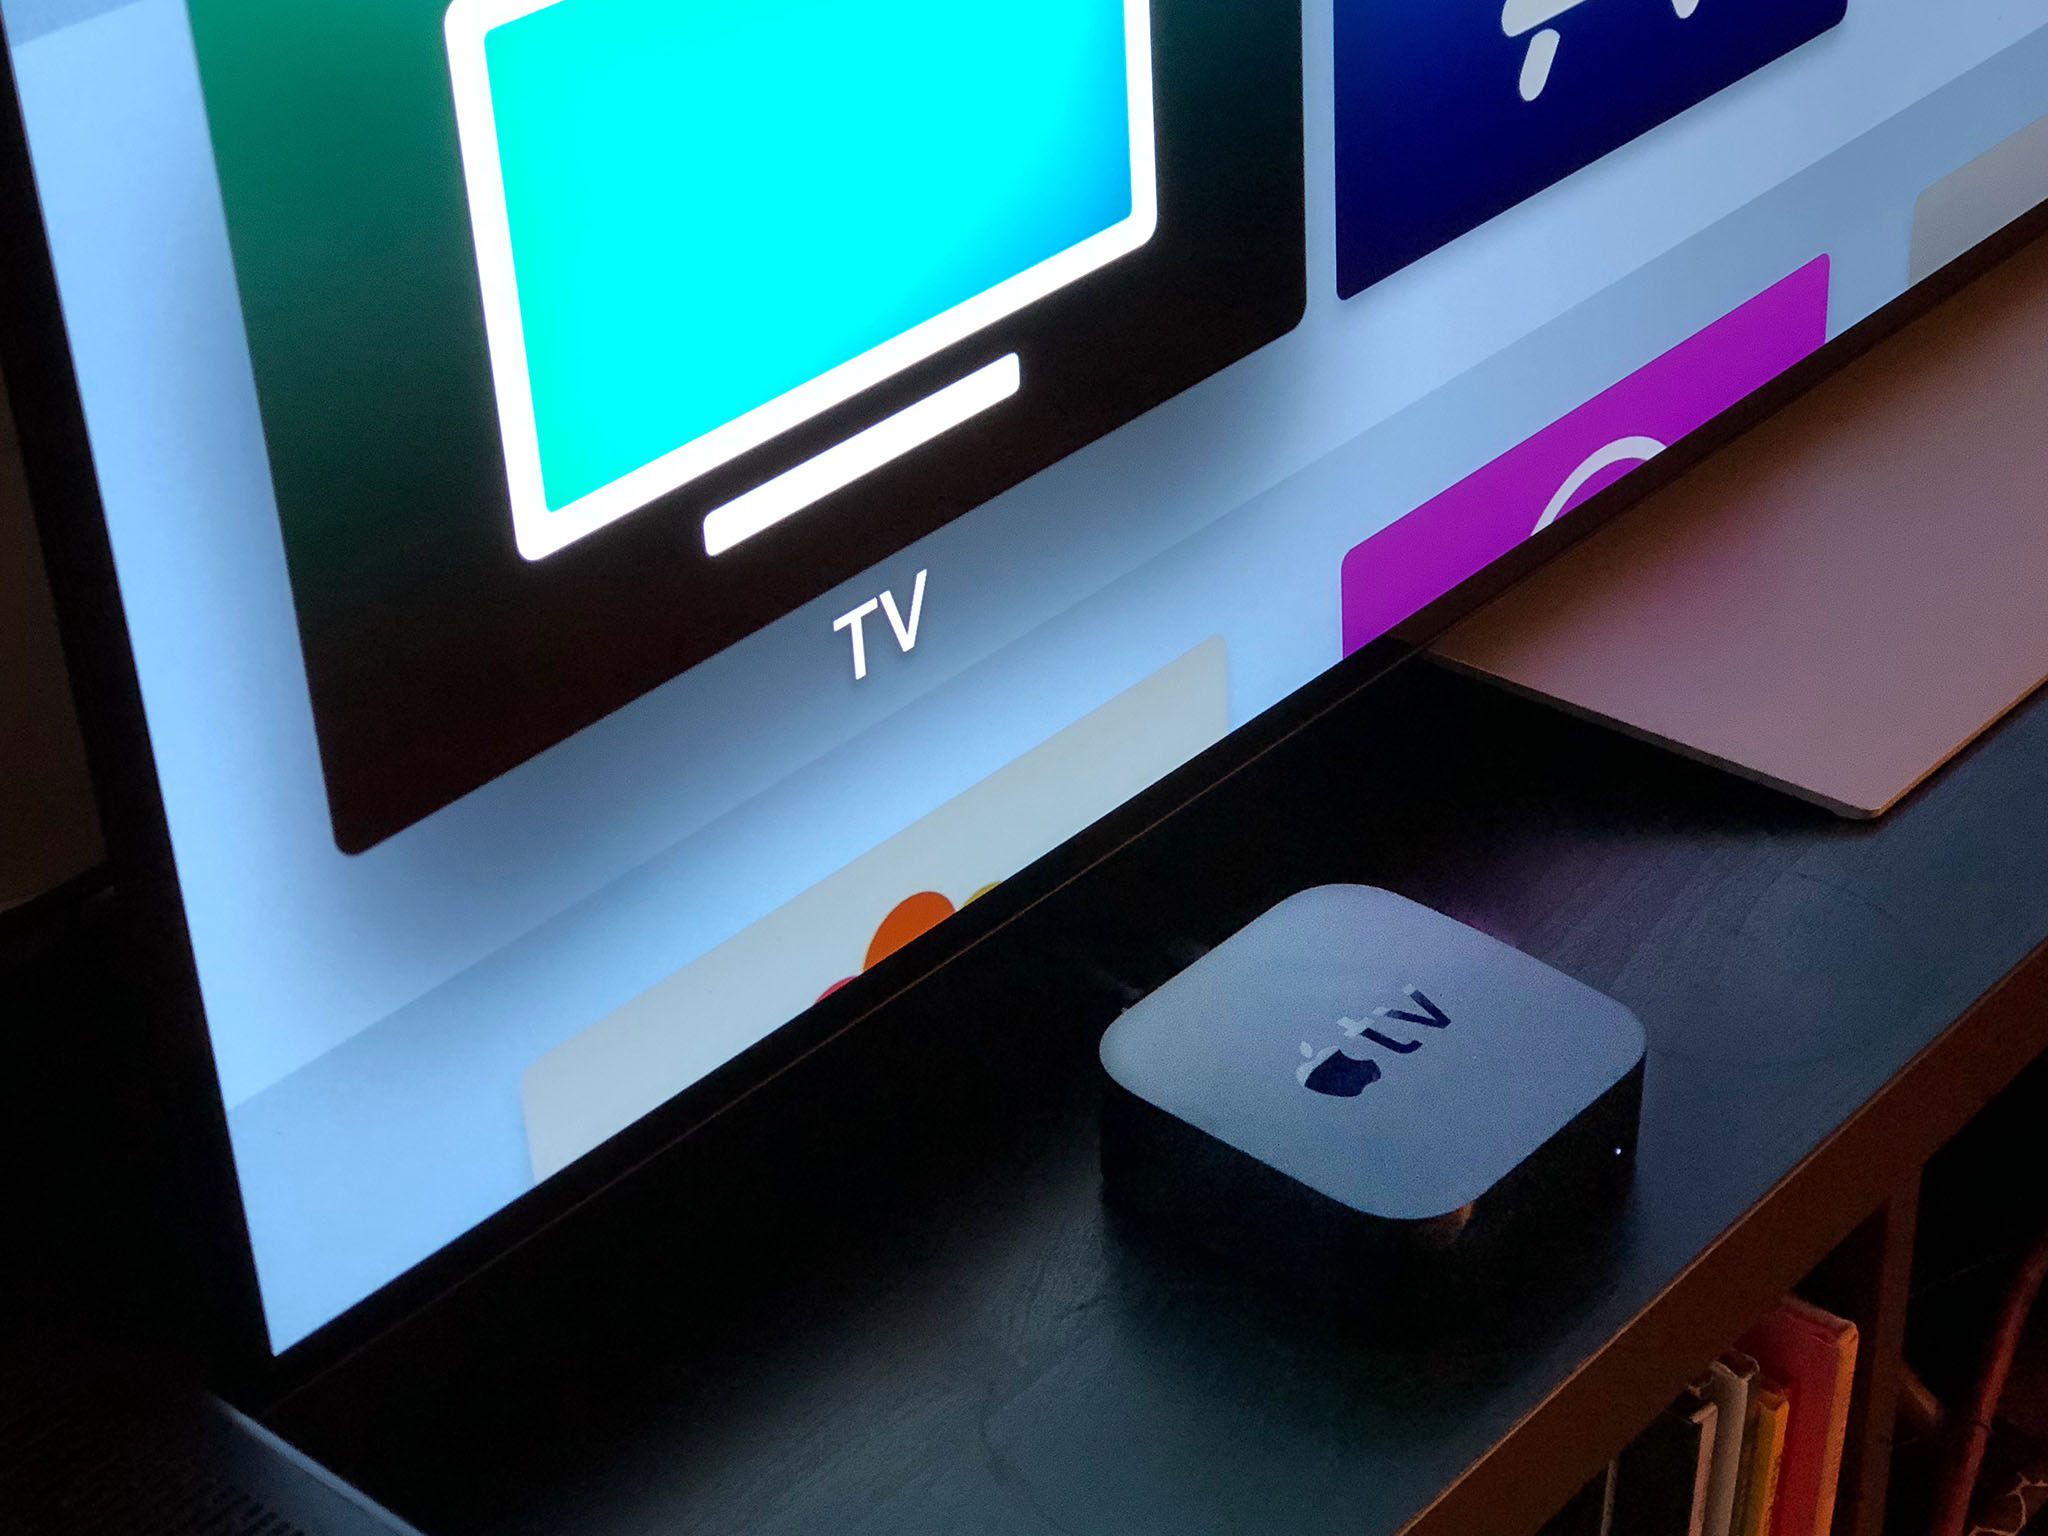 Best 4k Hdr Tvs For Apple Tv 4k In 2020 Imore